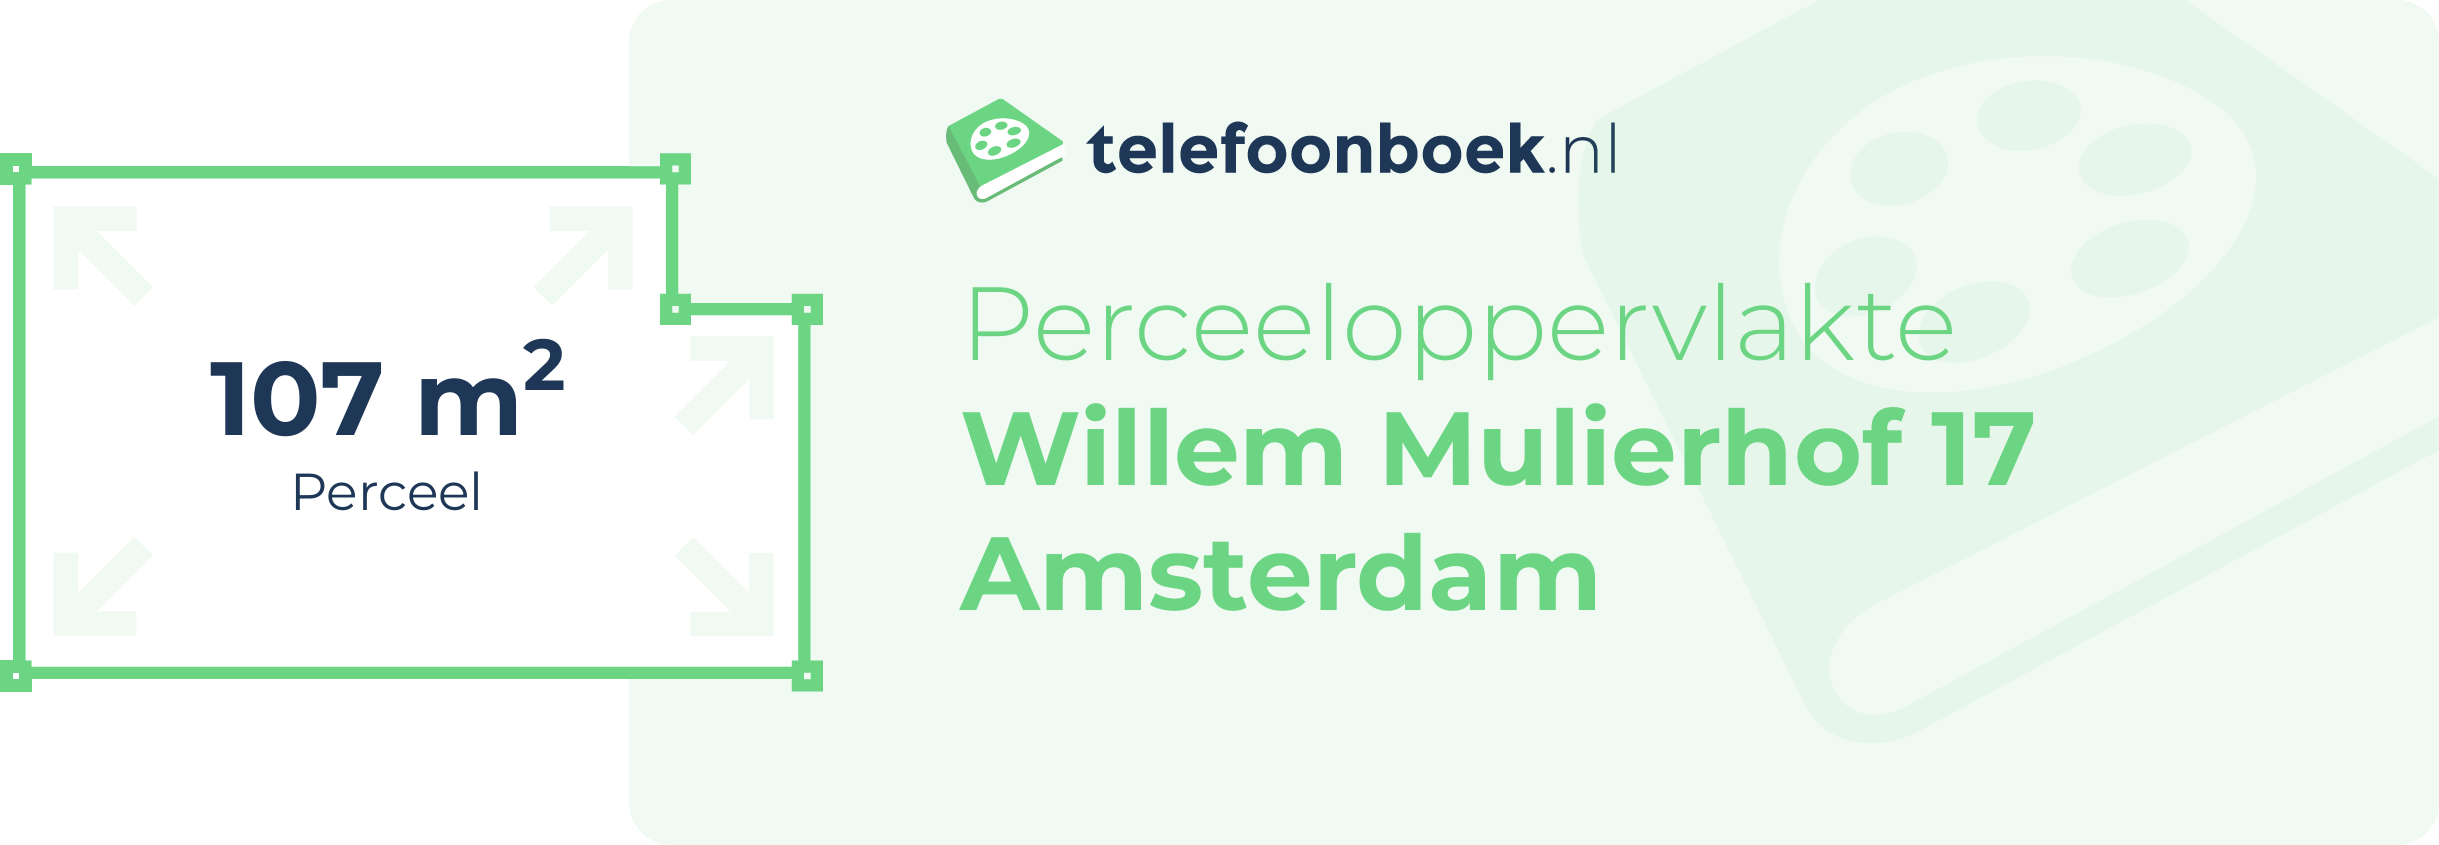 Perceeloppervlakte Willem Mulierhof 17 Amsterdam